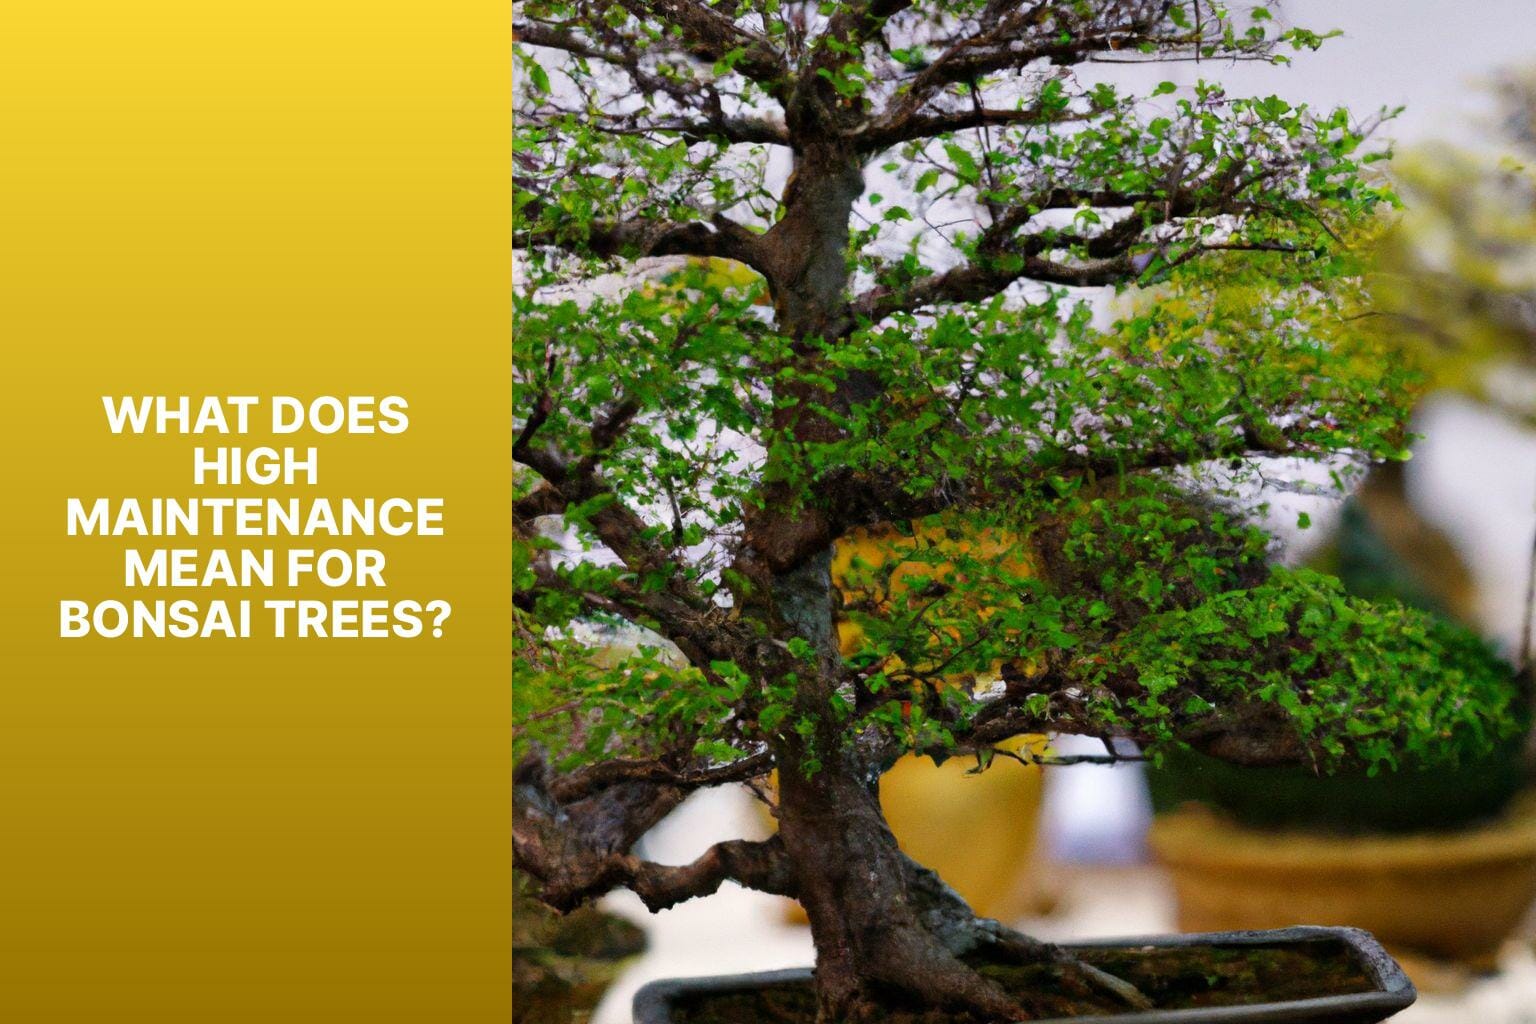 What Does High Maintenance Mean for Bonsai Trees? - are bonsai trees high maintenance 